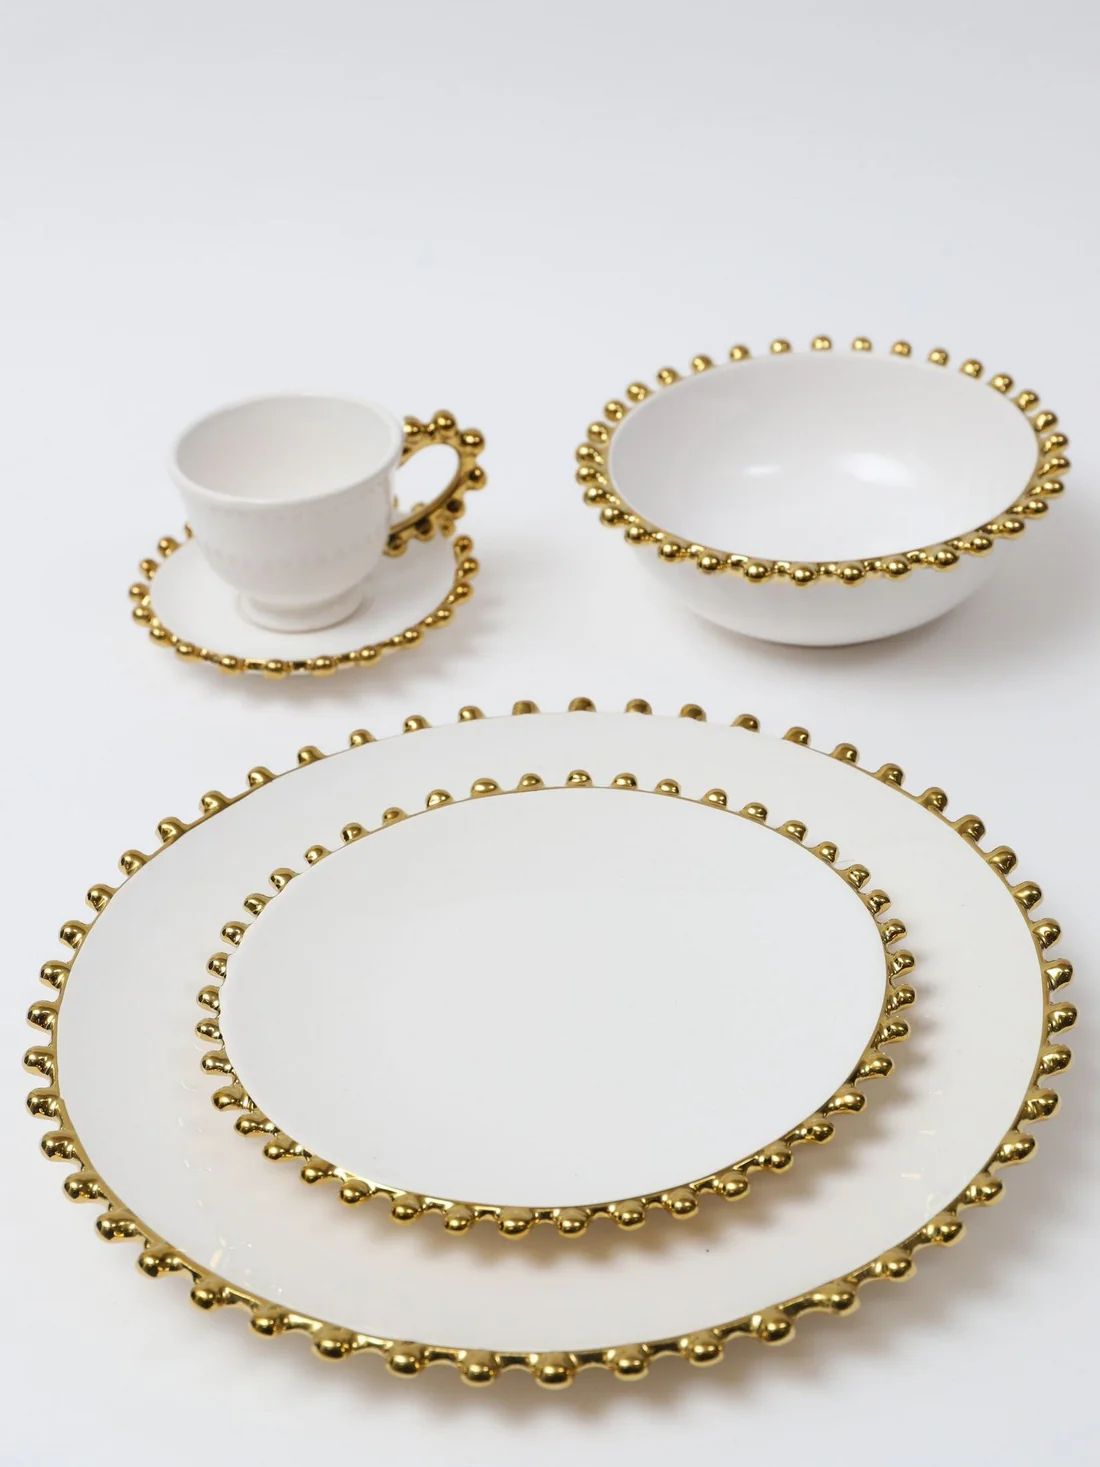 White and Gold Beaded Dinner Set | Inspire Me! Home Decor